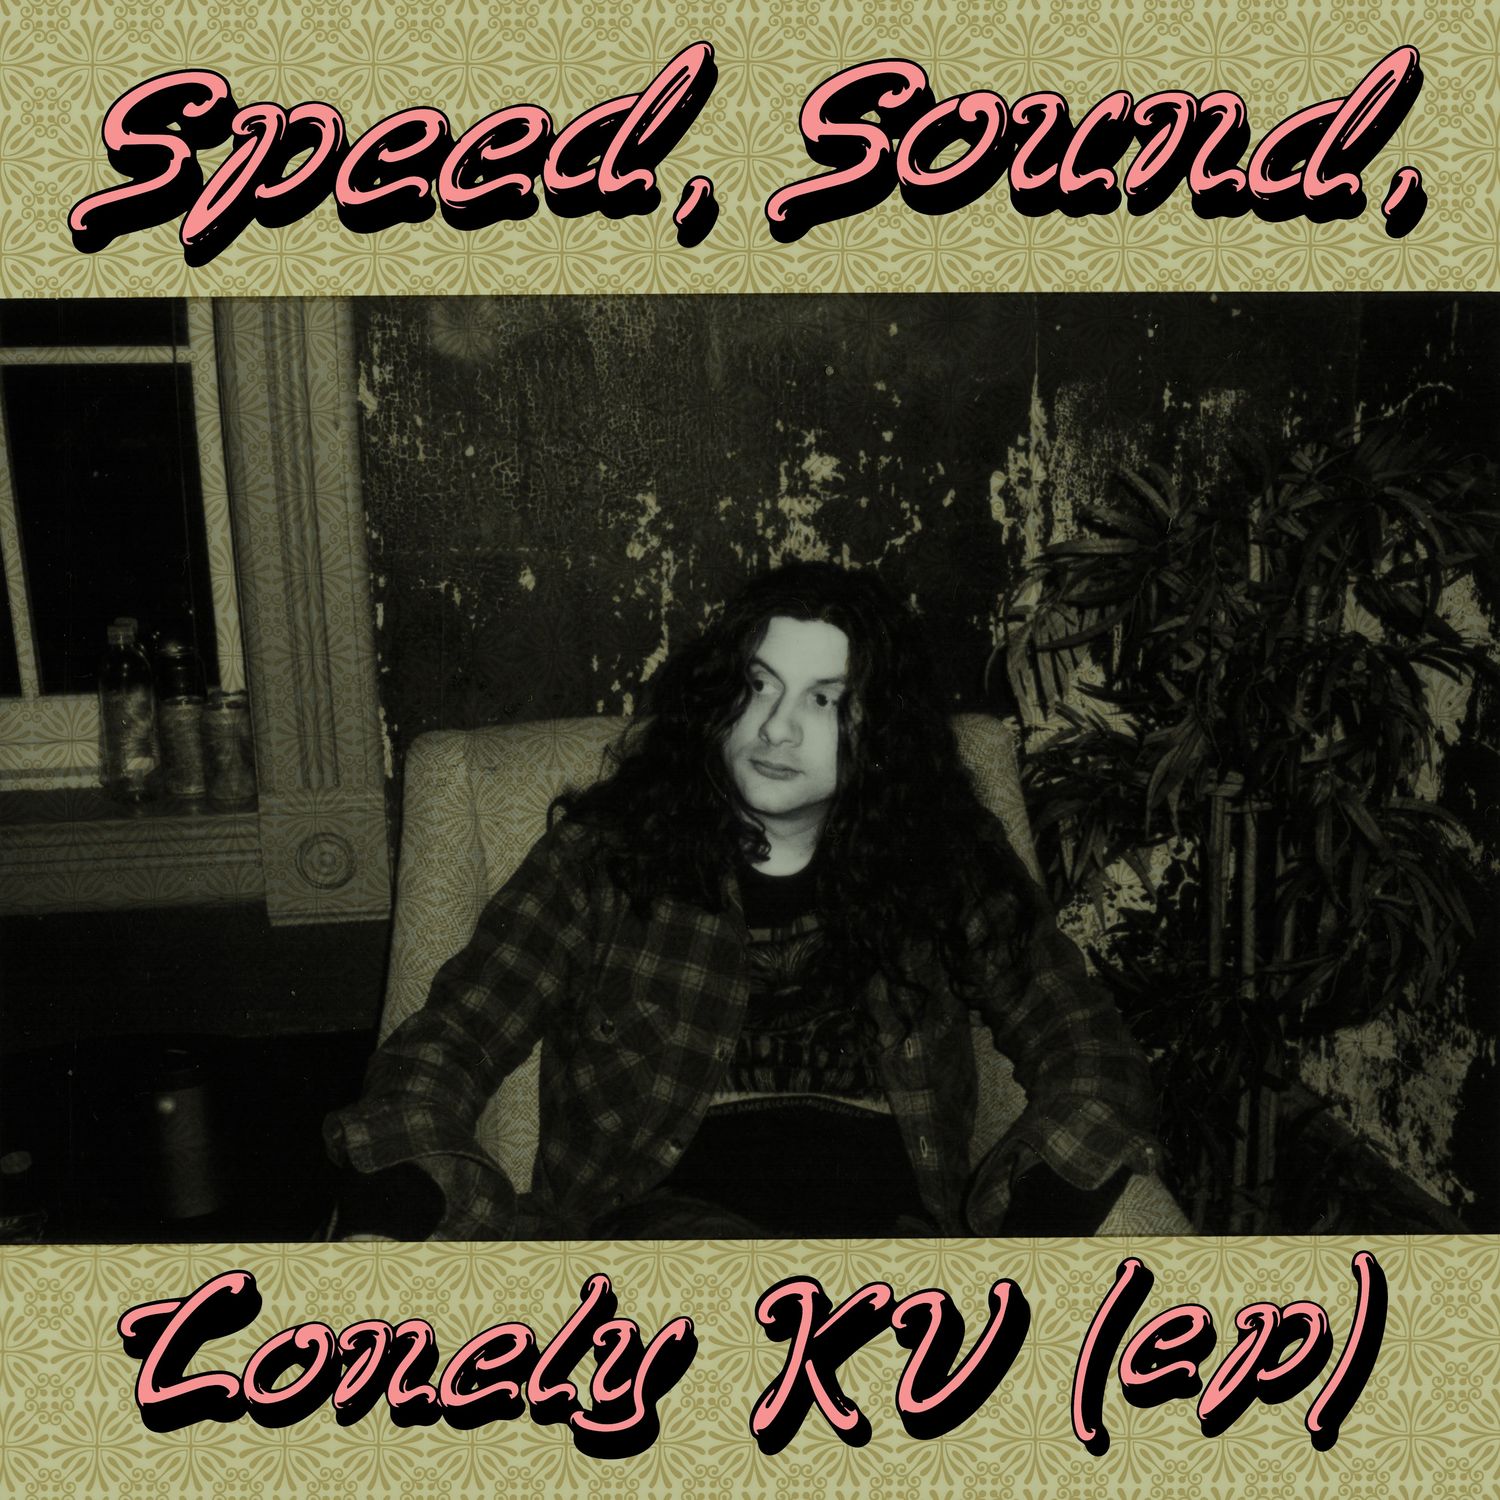 Kurt Vile - Speed, Sound, Lonely KV (EP) (2020) [FLAC 24bit/96kHz]